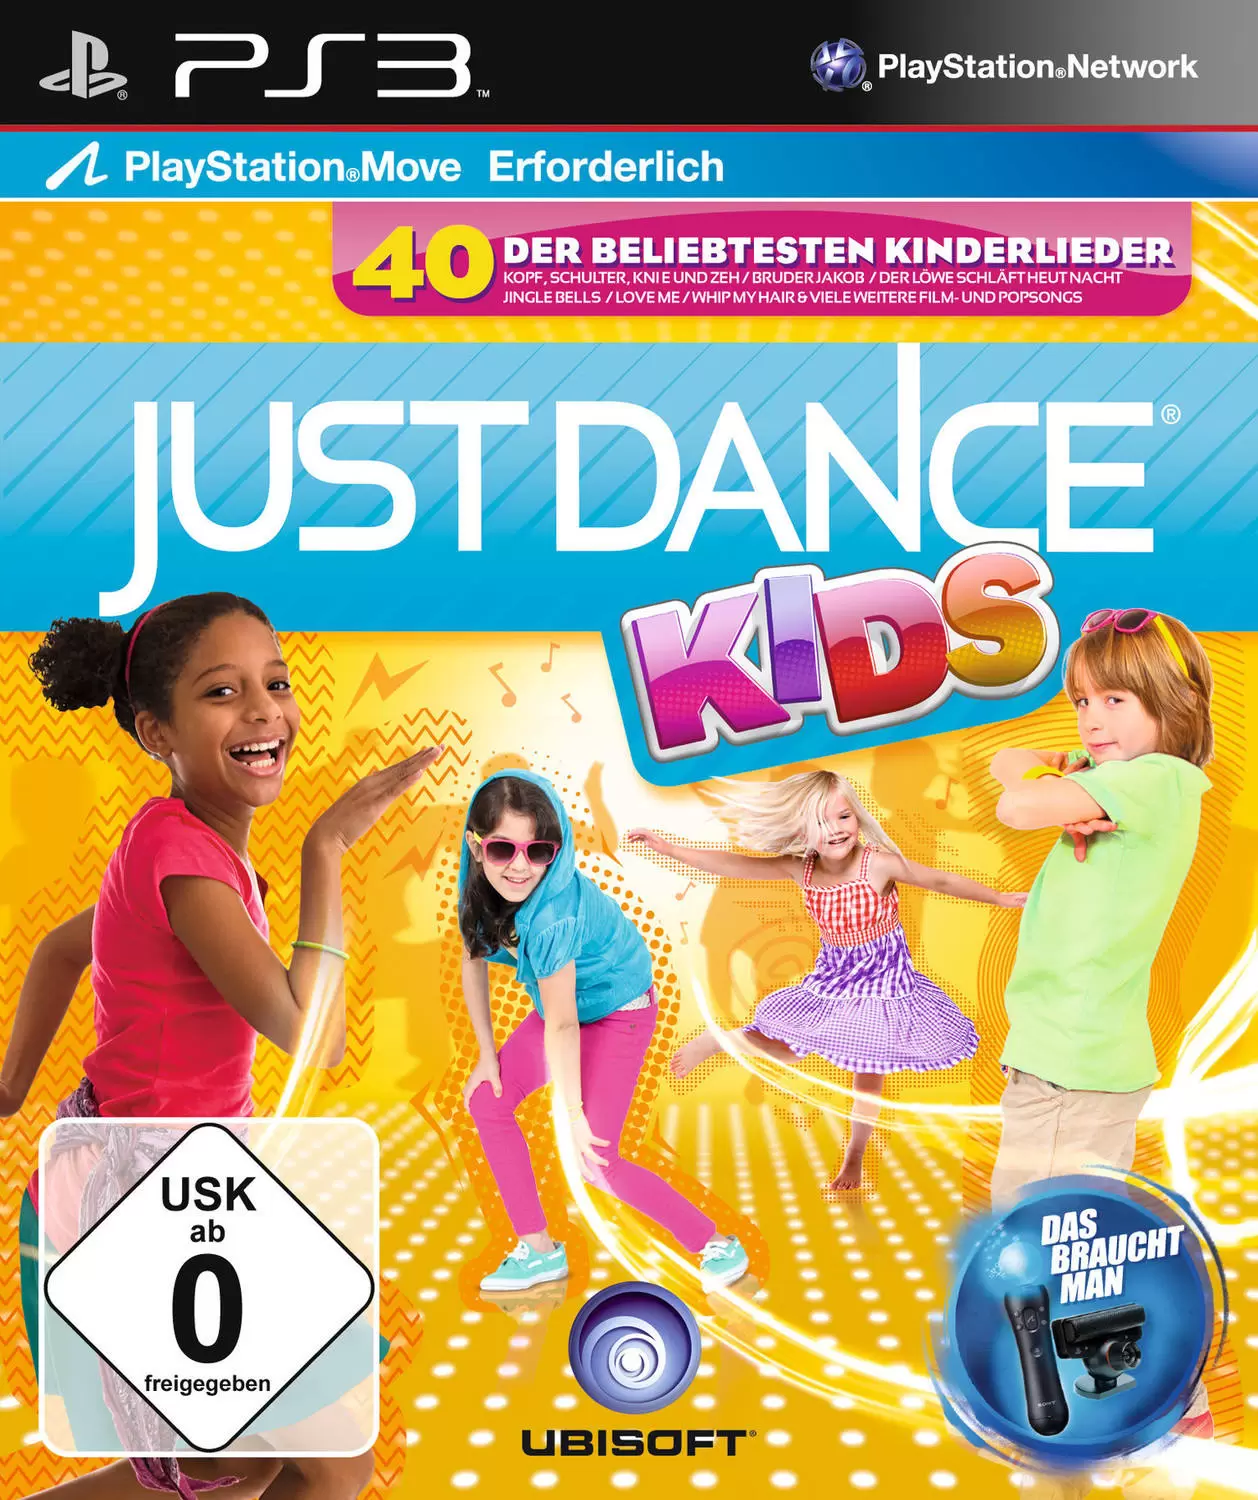 PS3 Games - JustDance kids